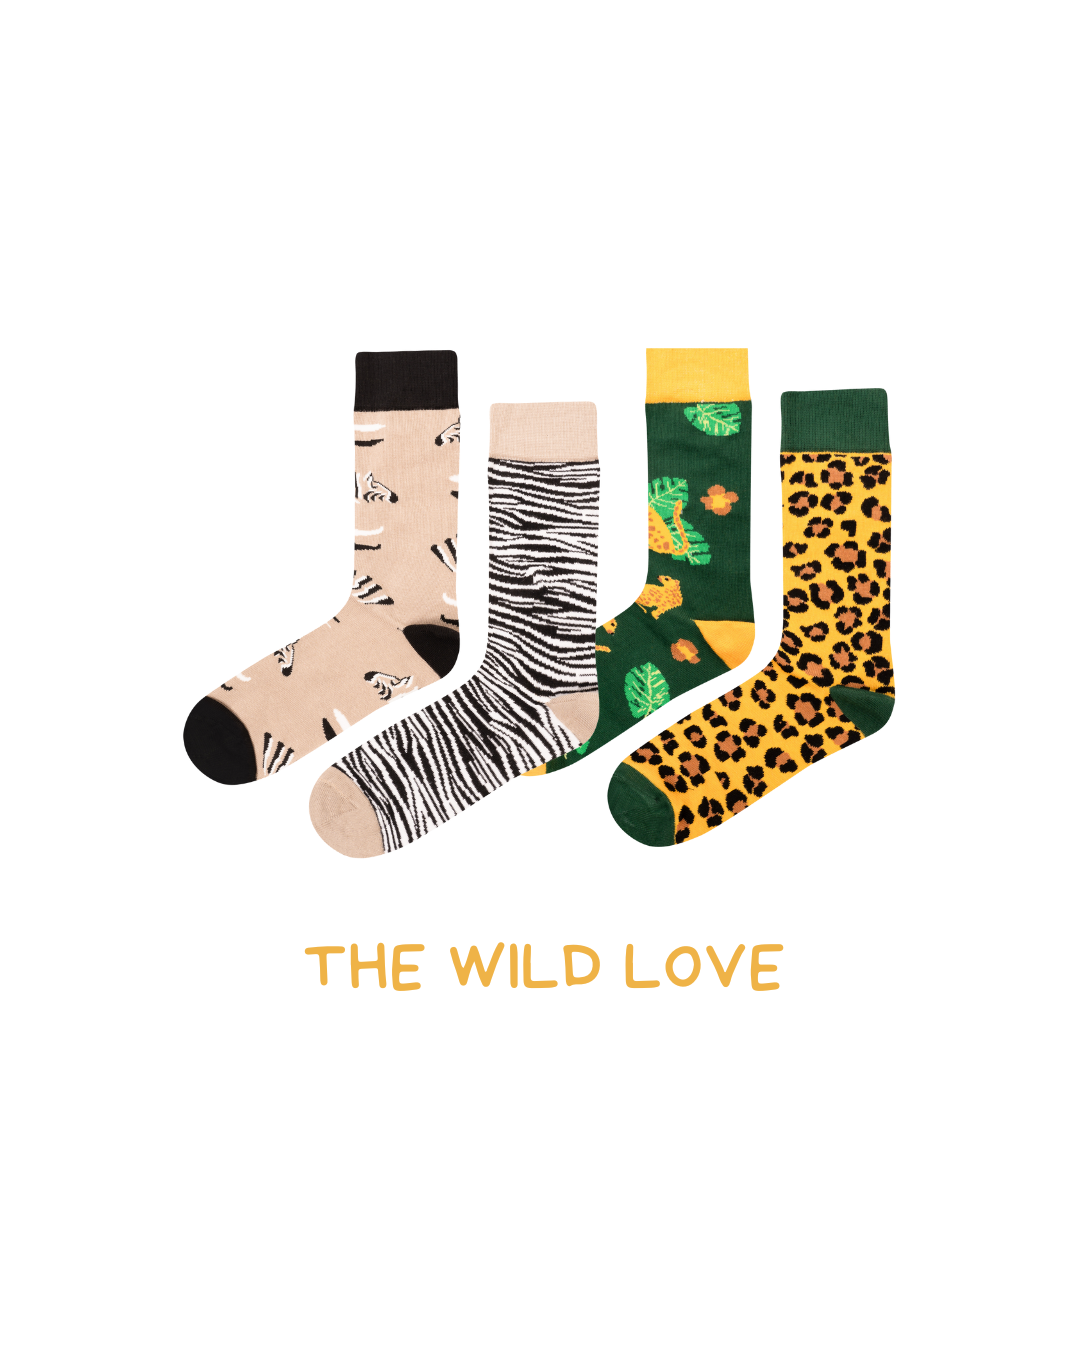 The Wild Love